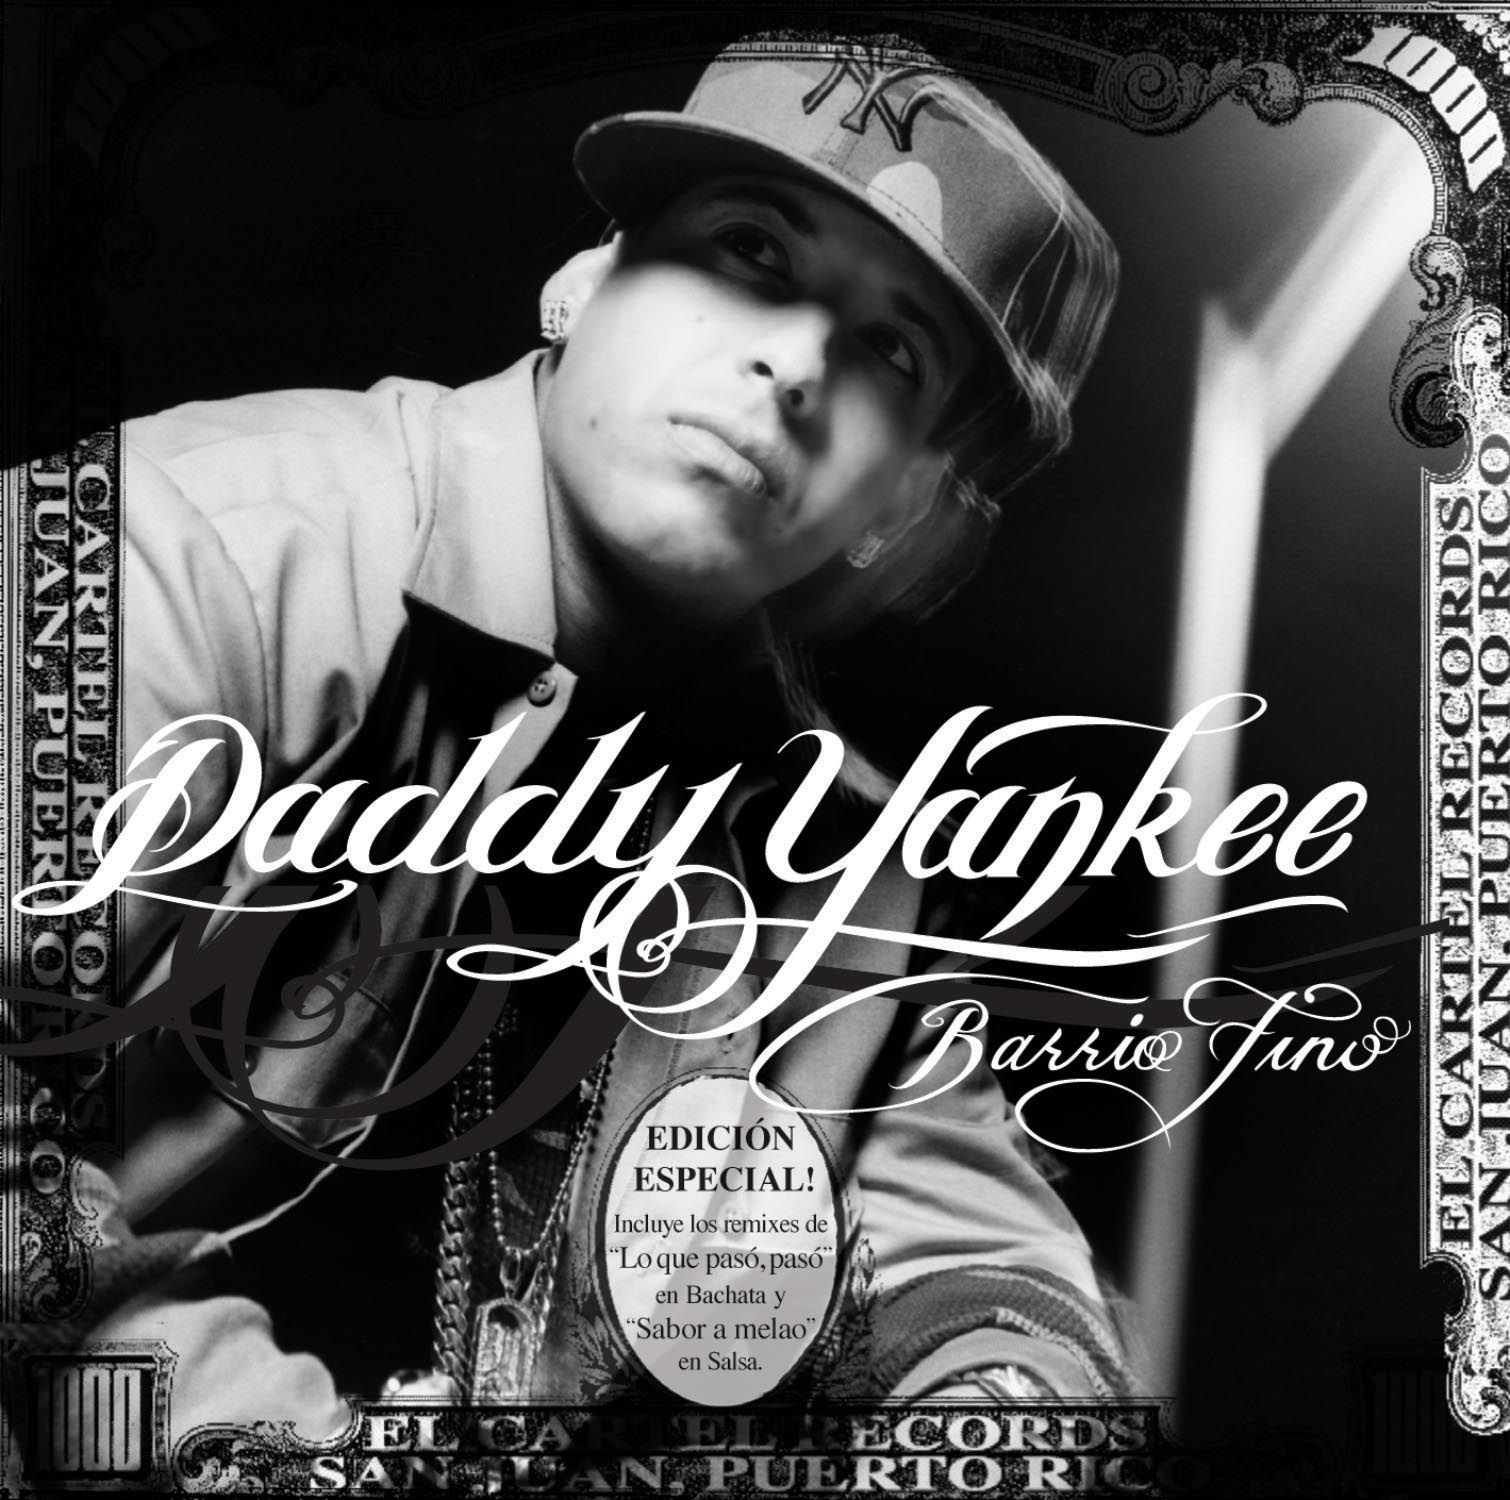 daddy yankee albums